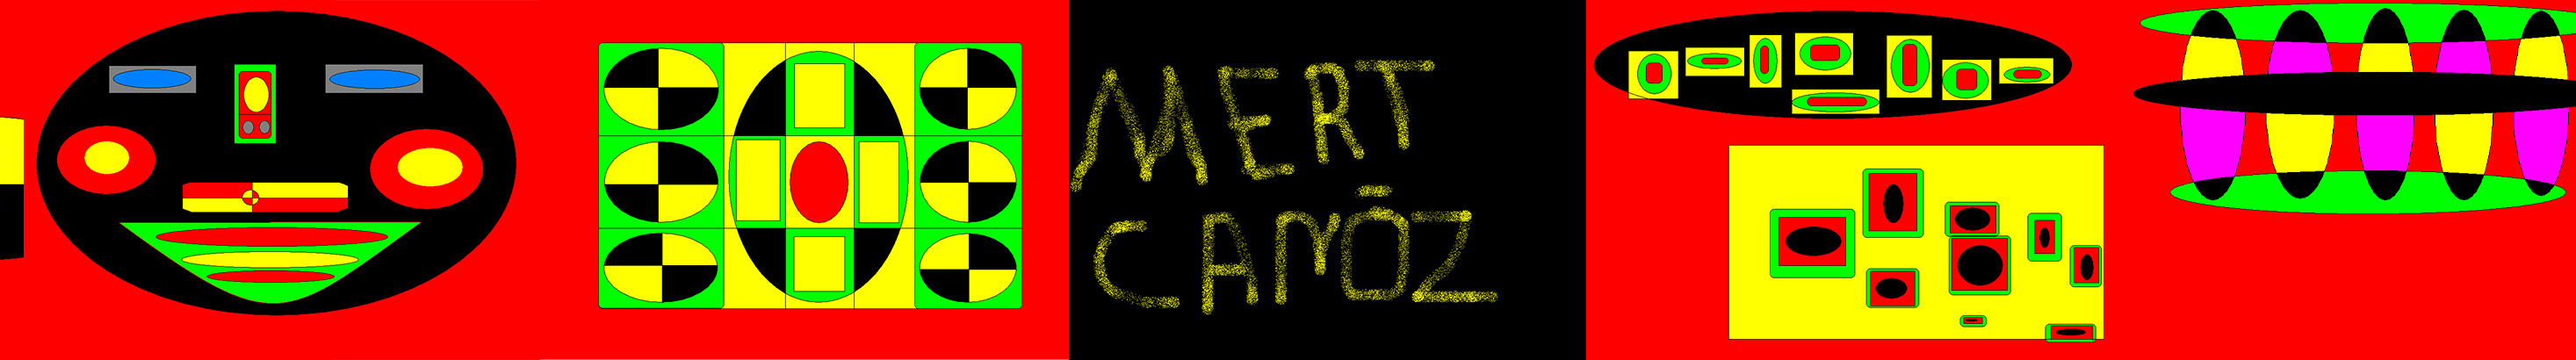 Mert Canöz's profile banner